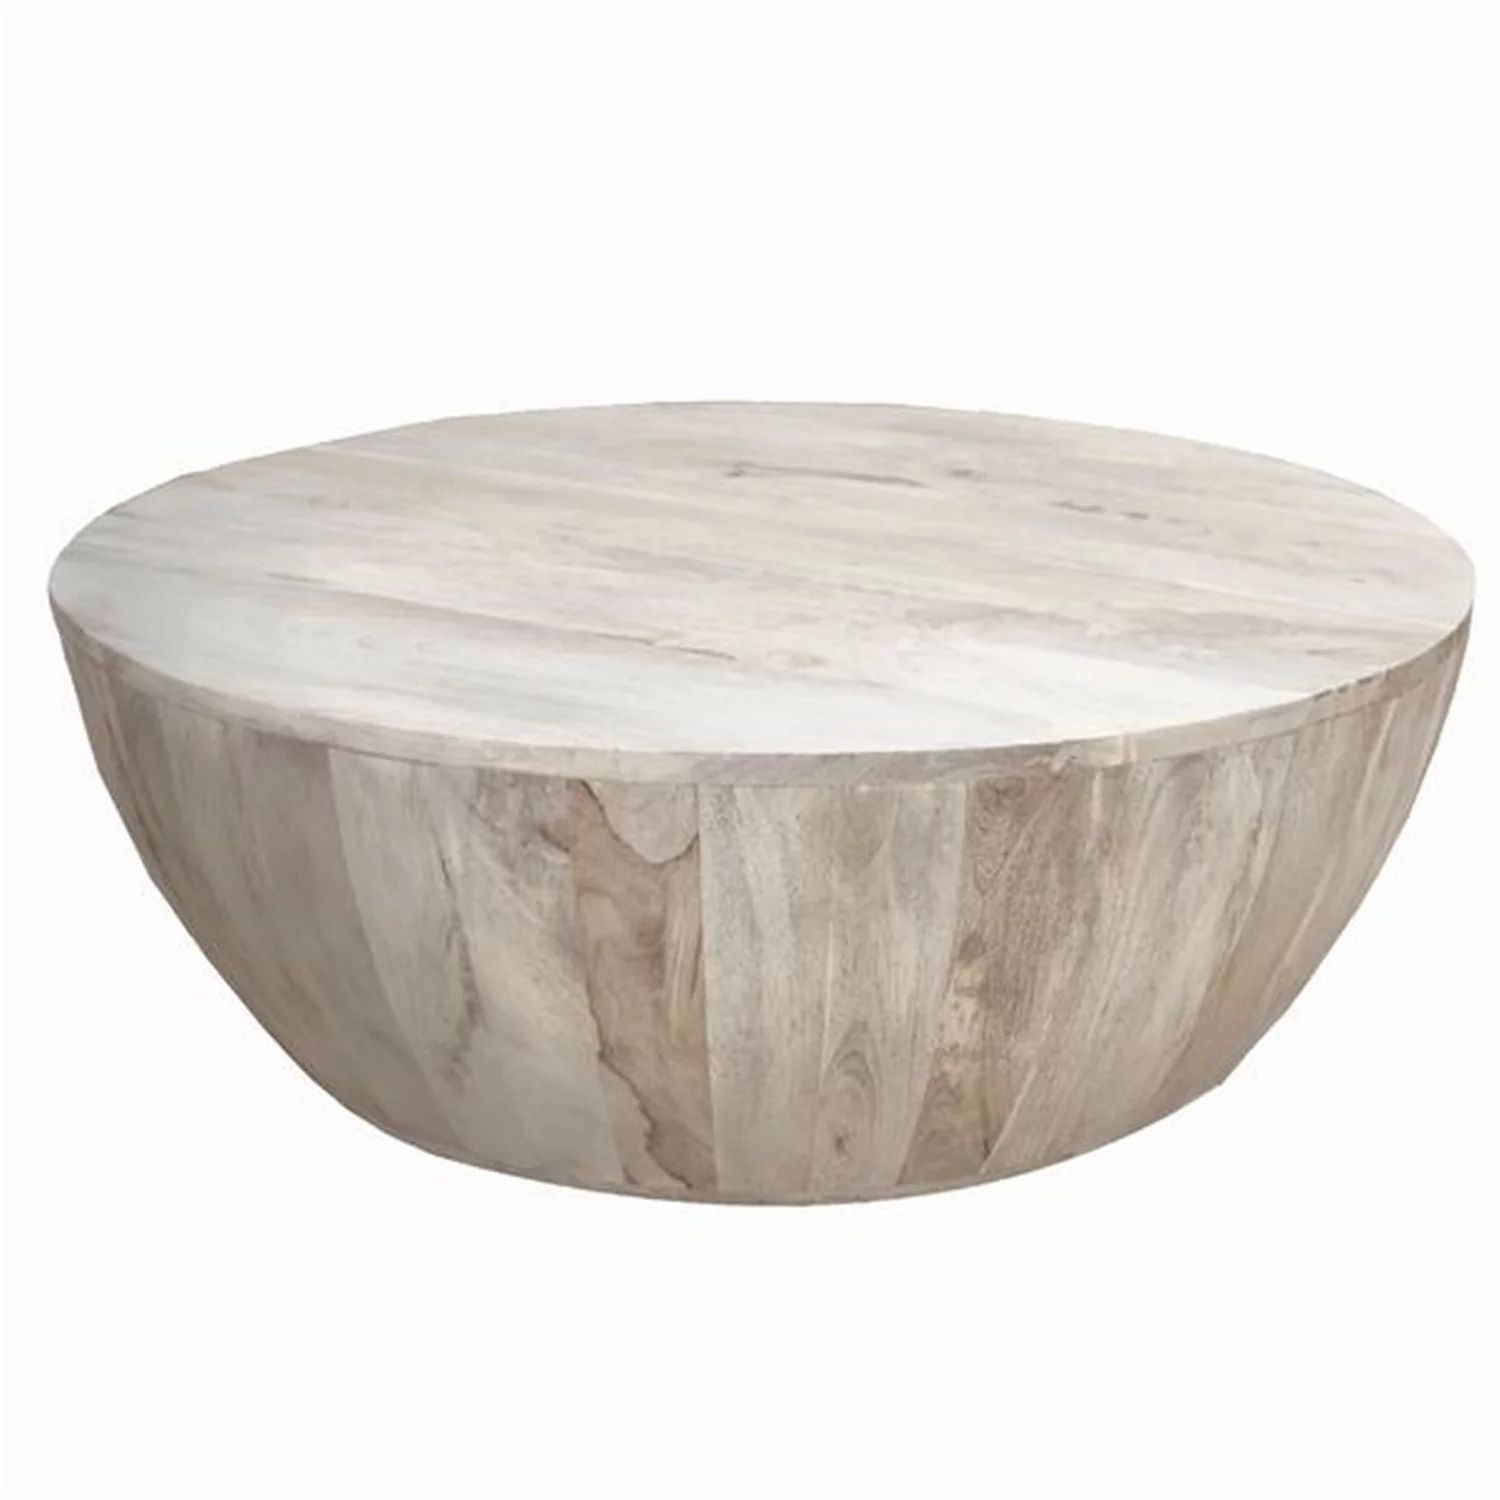 Distressed Mango Wood Coffee Table in Round Shape, Washed Light Brown - Walmart.com | Walmart (US)